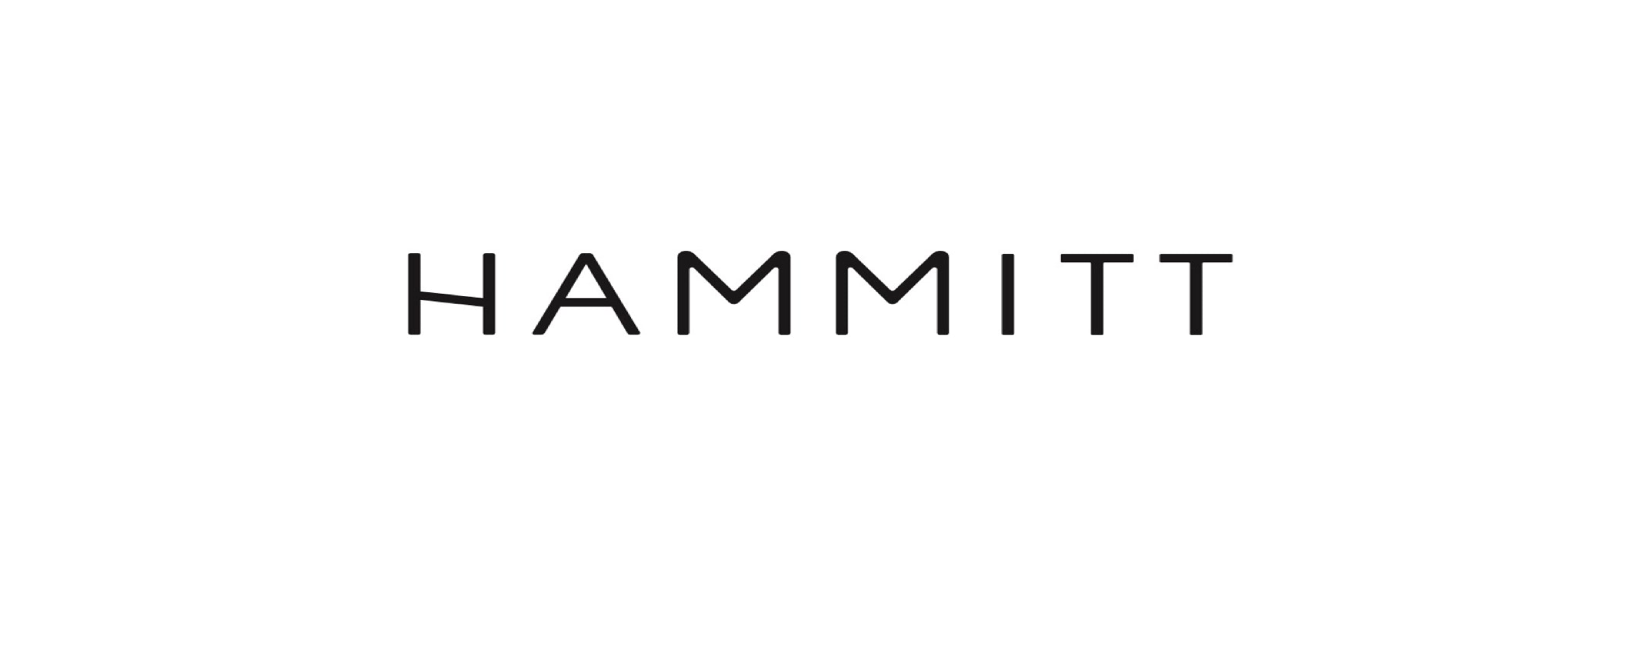 Hammitt Discount Code 2022